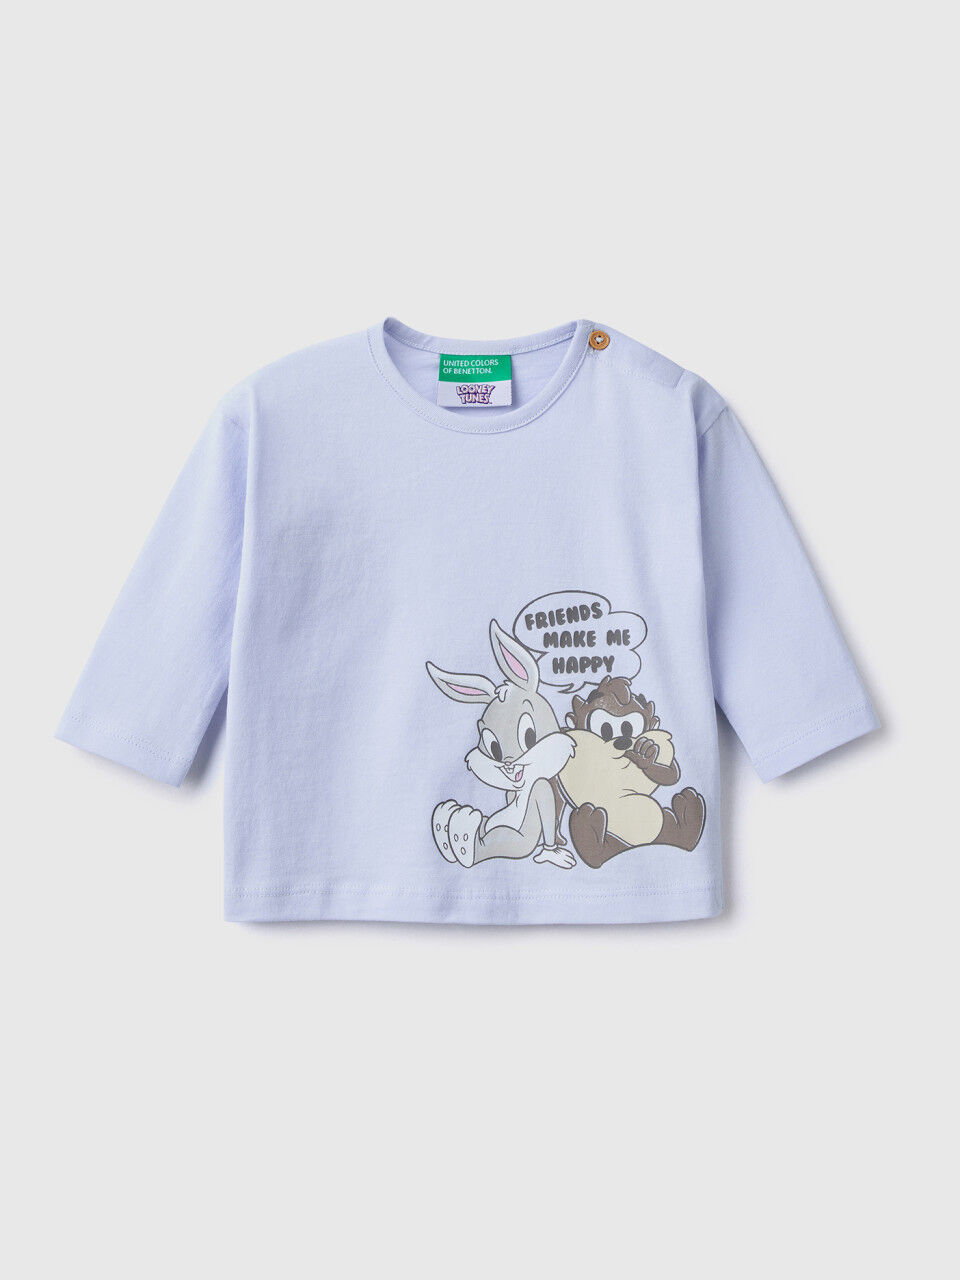 100% cotton Looney Tunes t-shirt